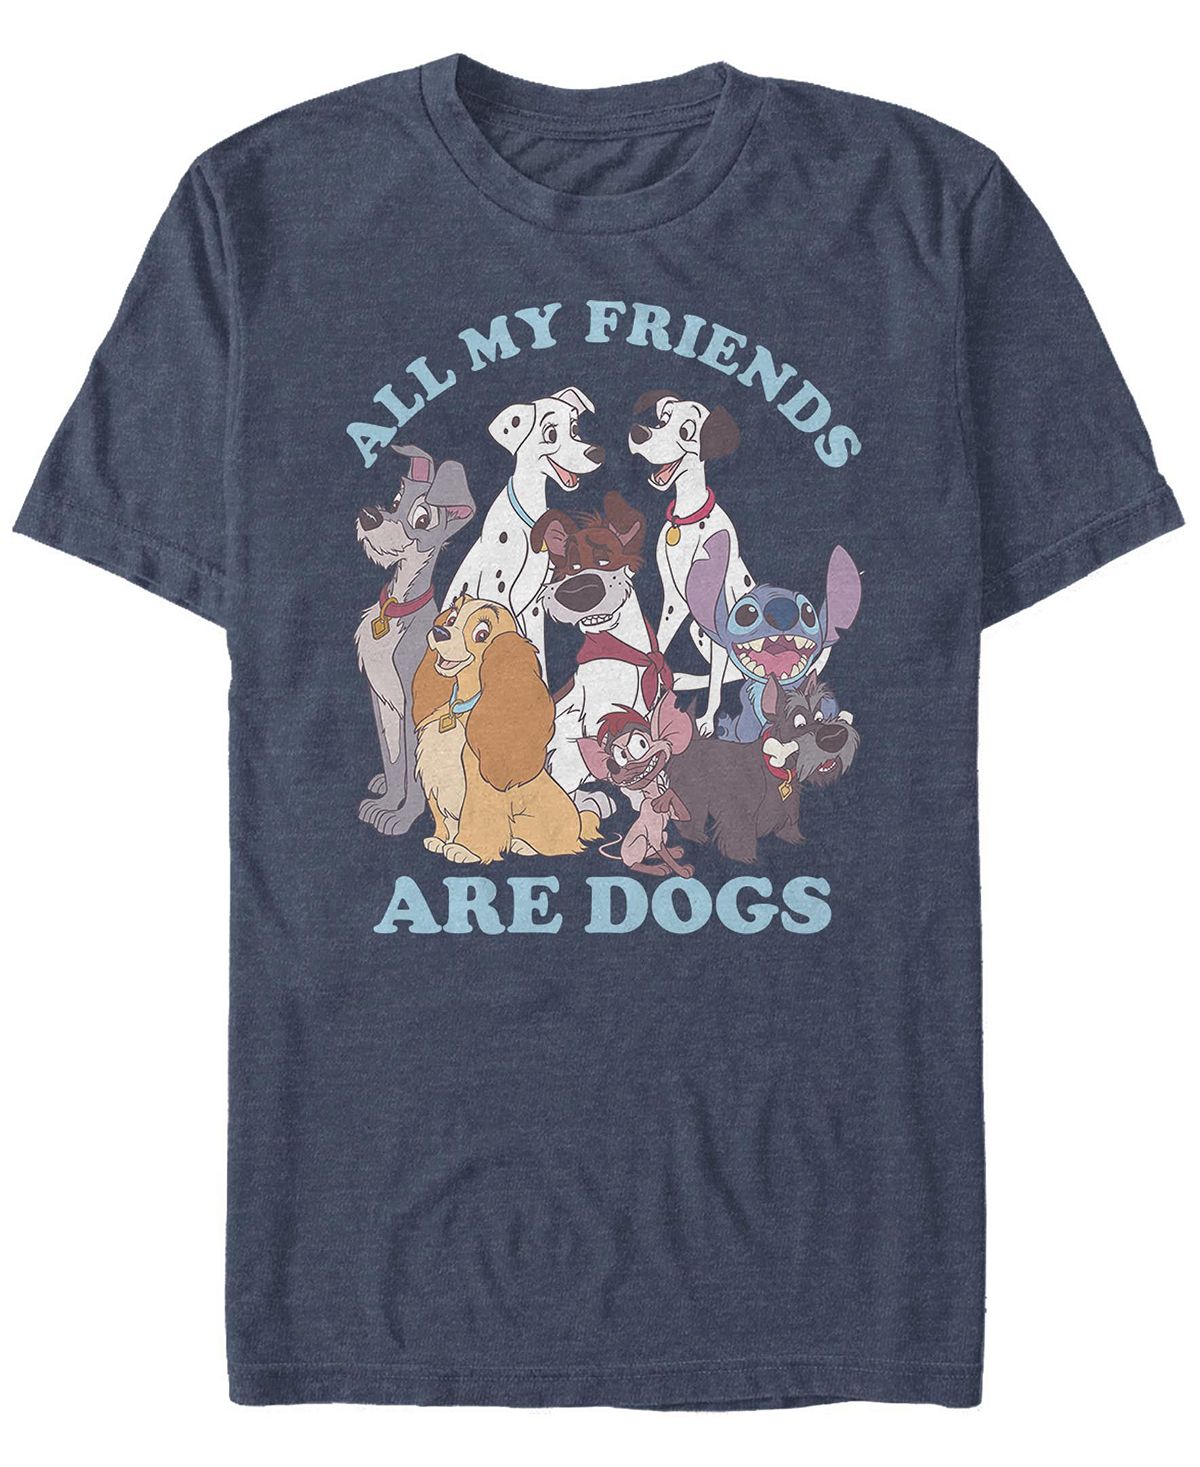 Мужская футболка с короткими рукавами disney multi franchise dog friends Fifth Sun, синий